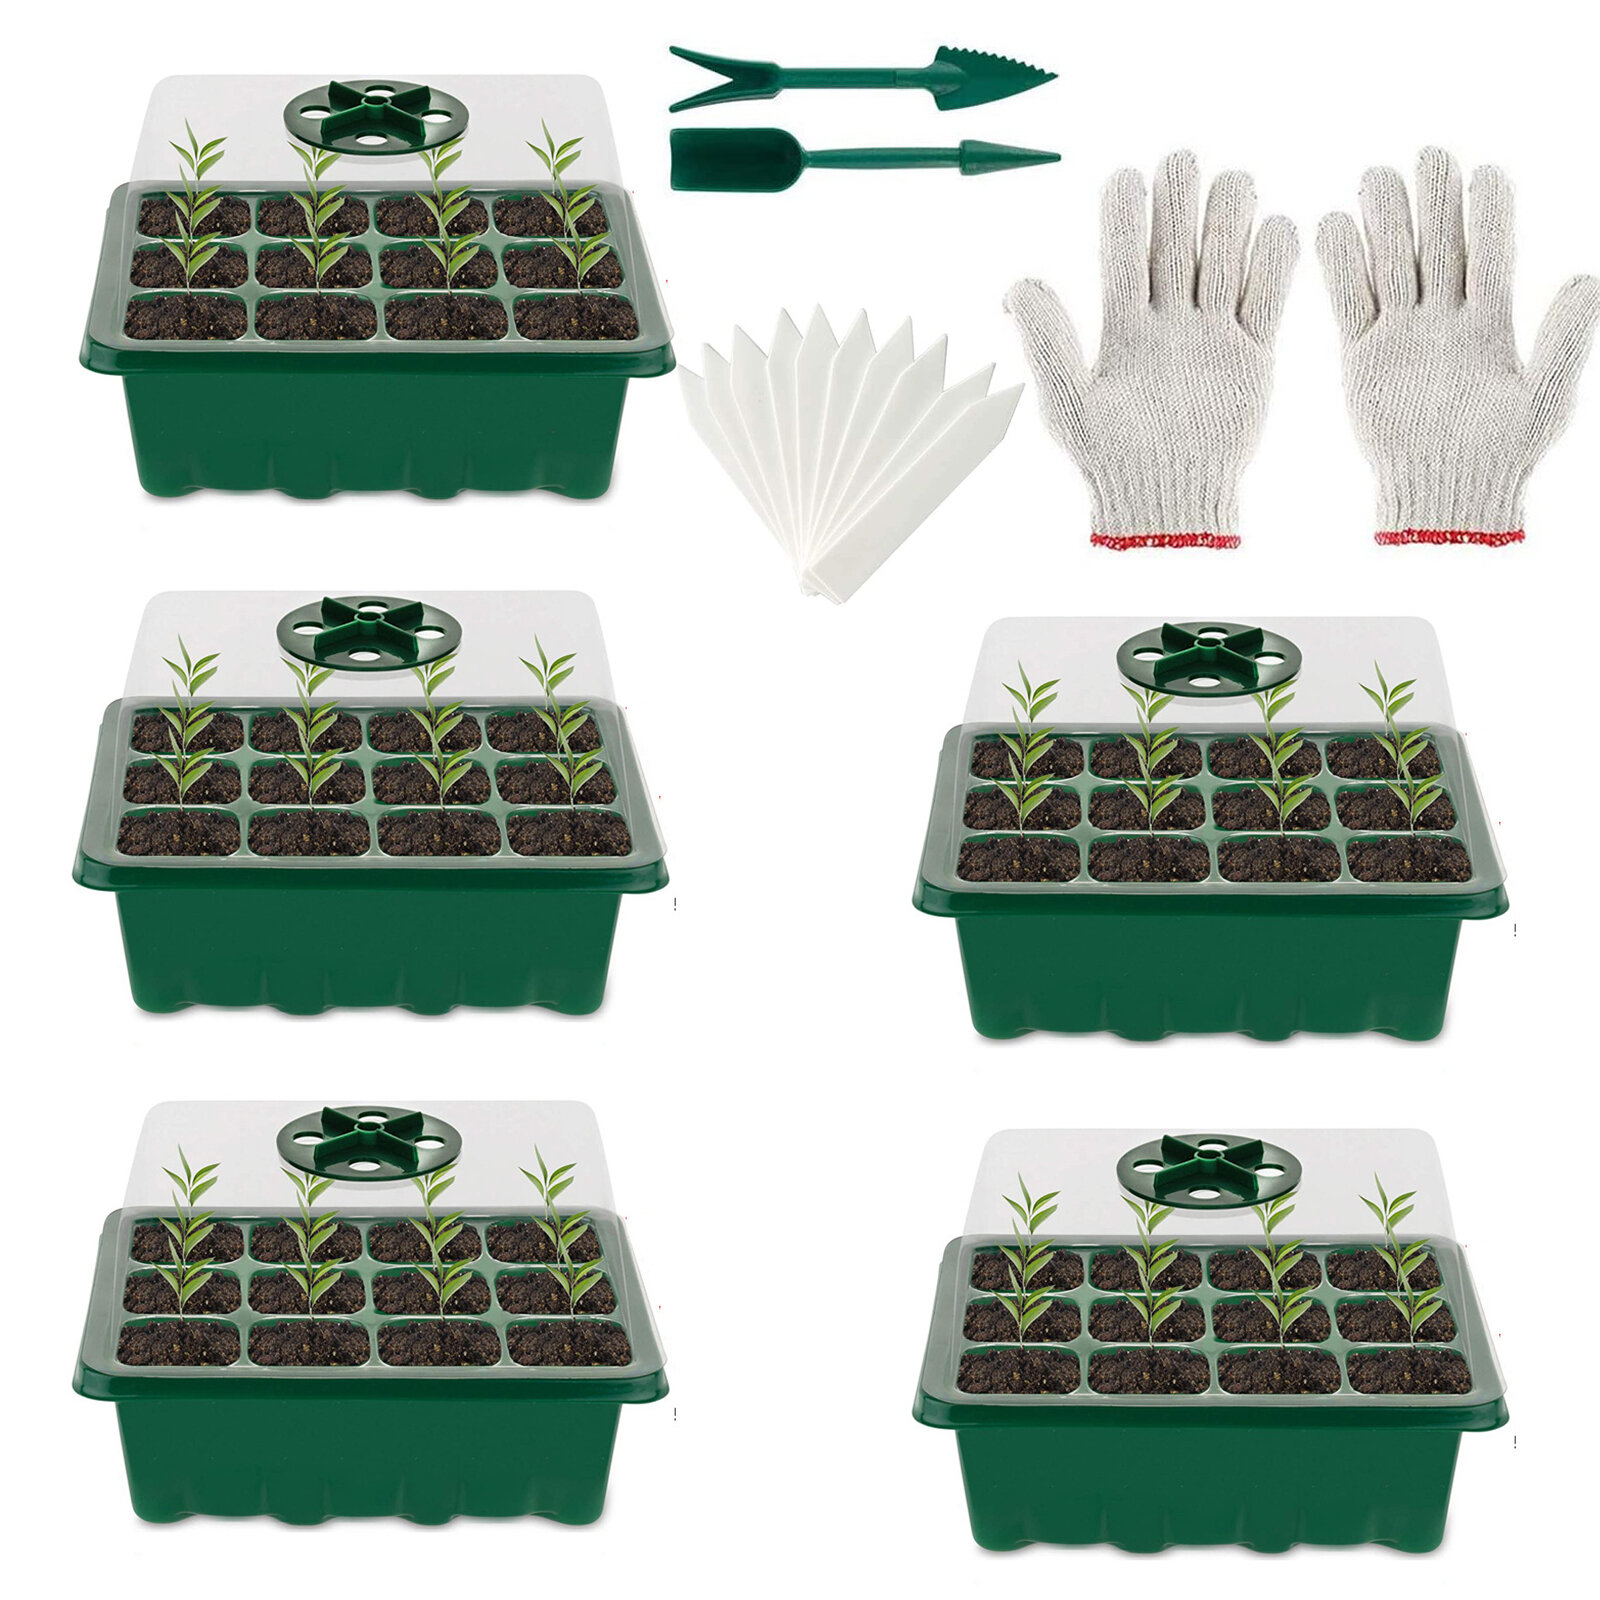 

Garfans 5 Pack Seed Trays Seedling Starter Tray Plant Starter Kit Humidity Adjustable Garden Propagator Set Germination